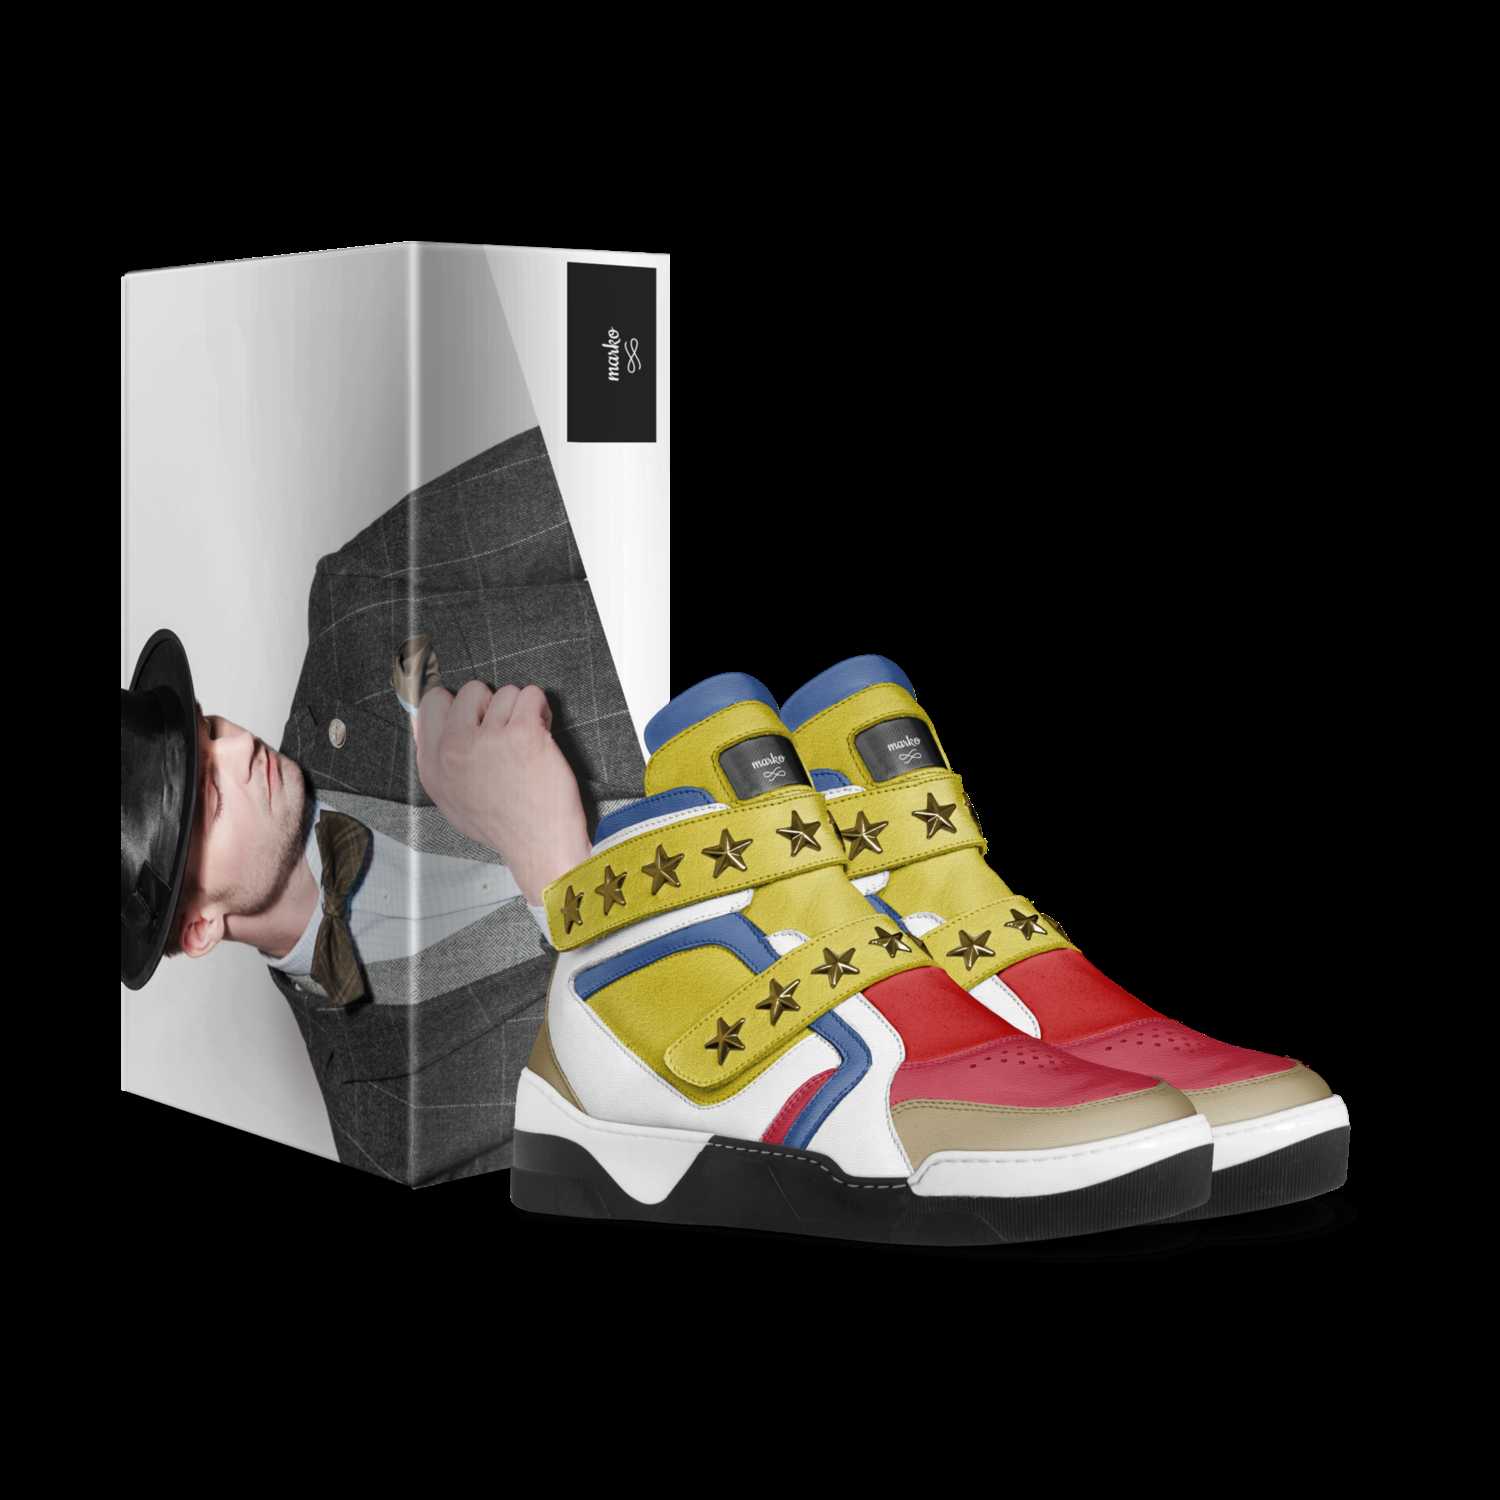 marko | A Custom Shoe concept by Kobiy